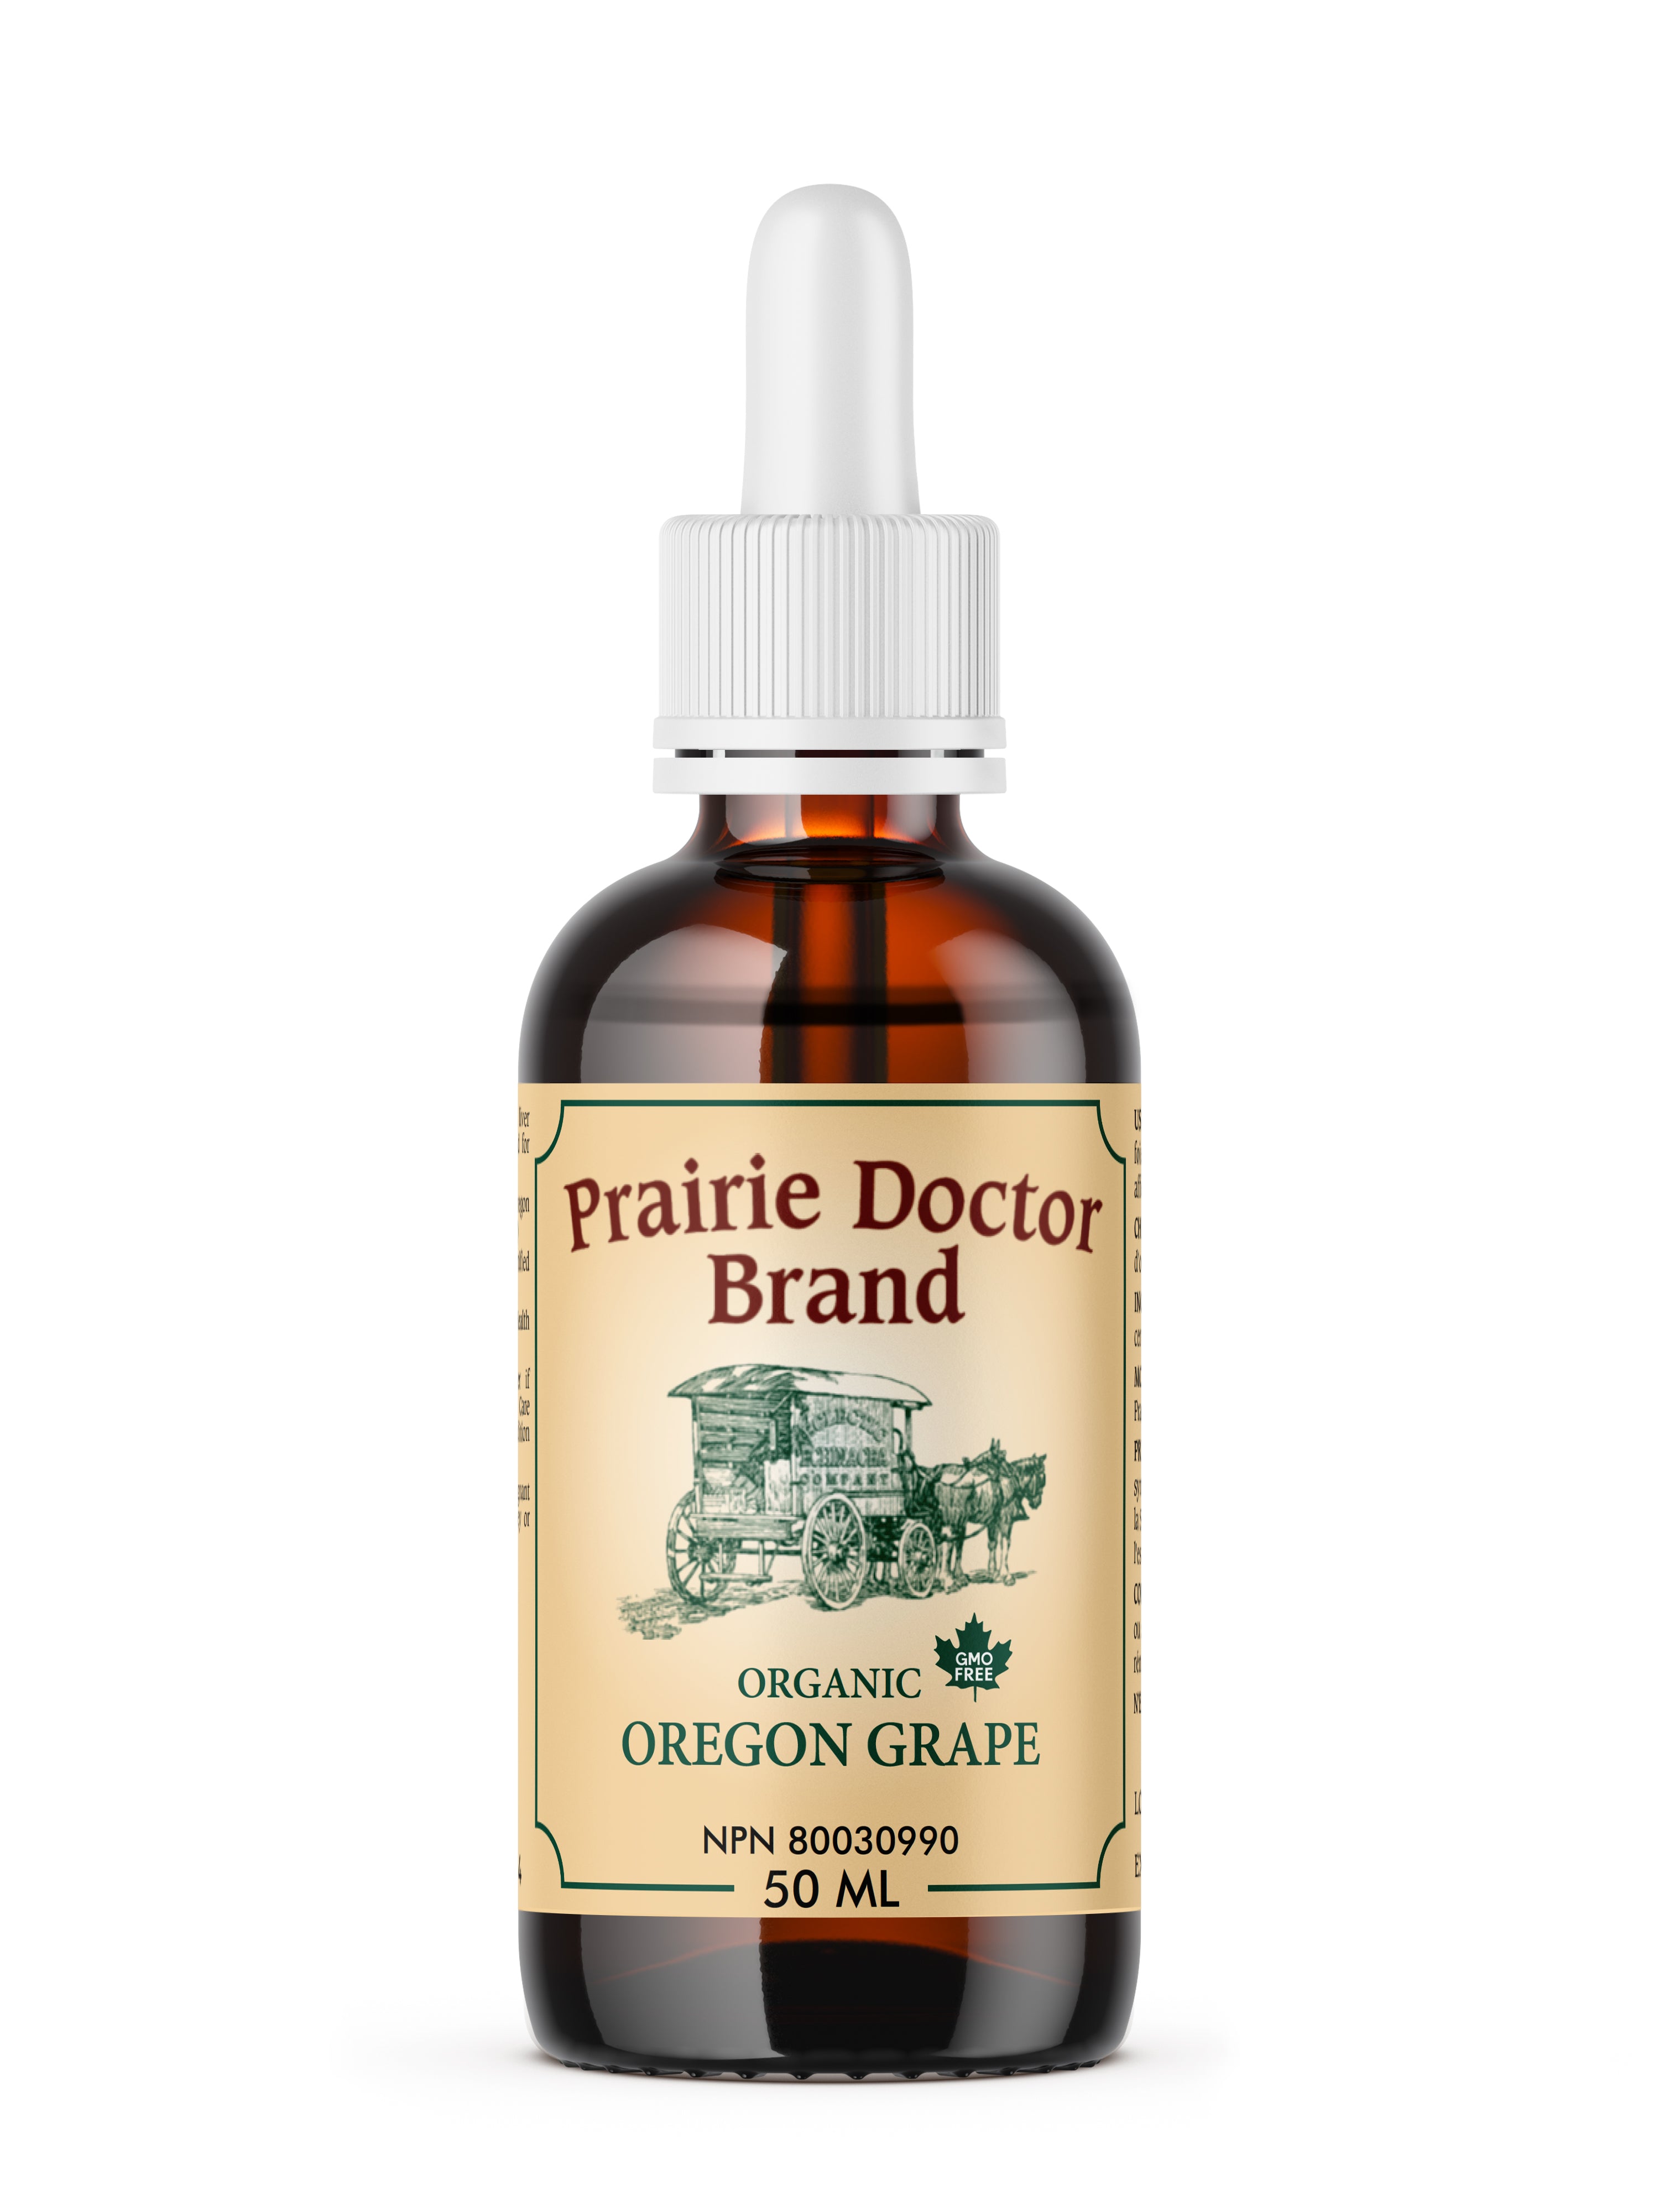 Prairie Doctor Oregon Grape (50ml) - Lifestyle Markets